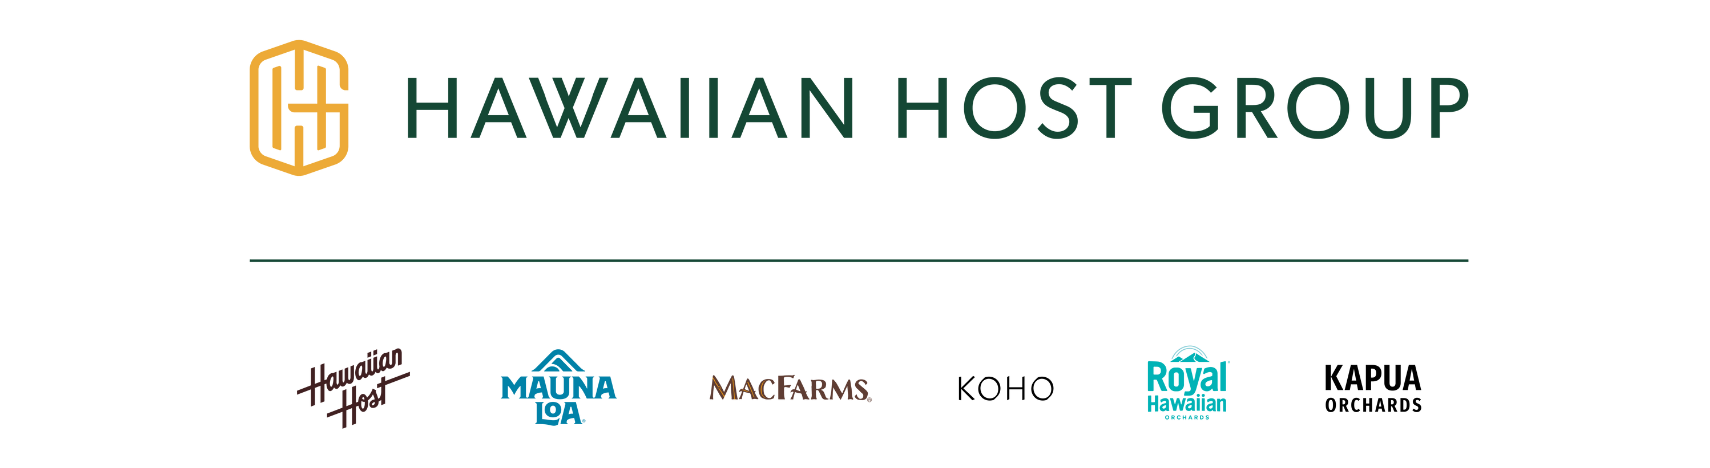 Hawaiian Host Group - Website